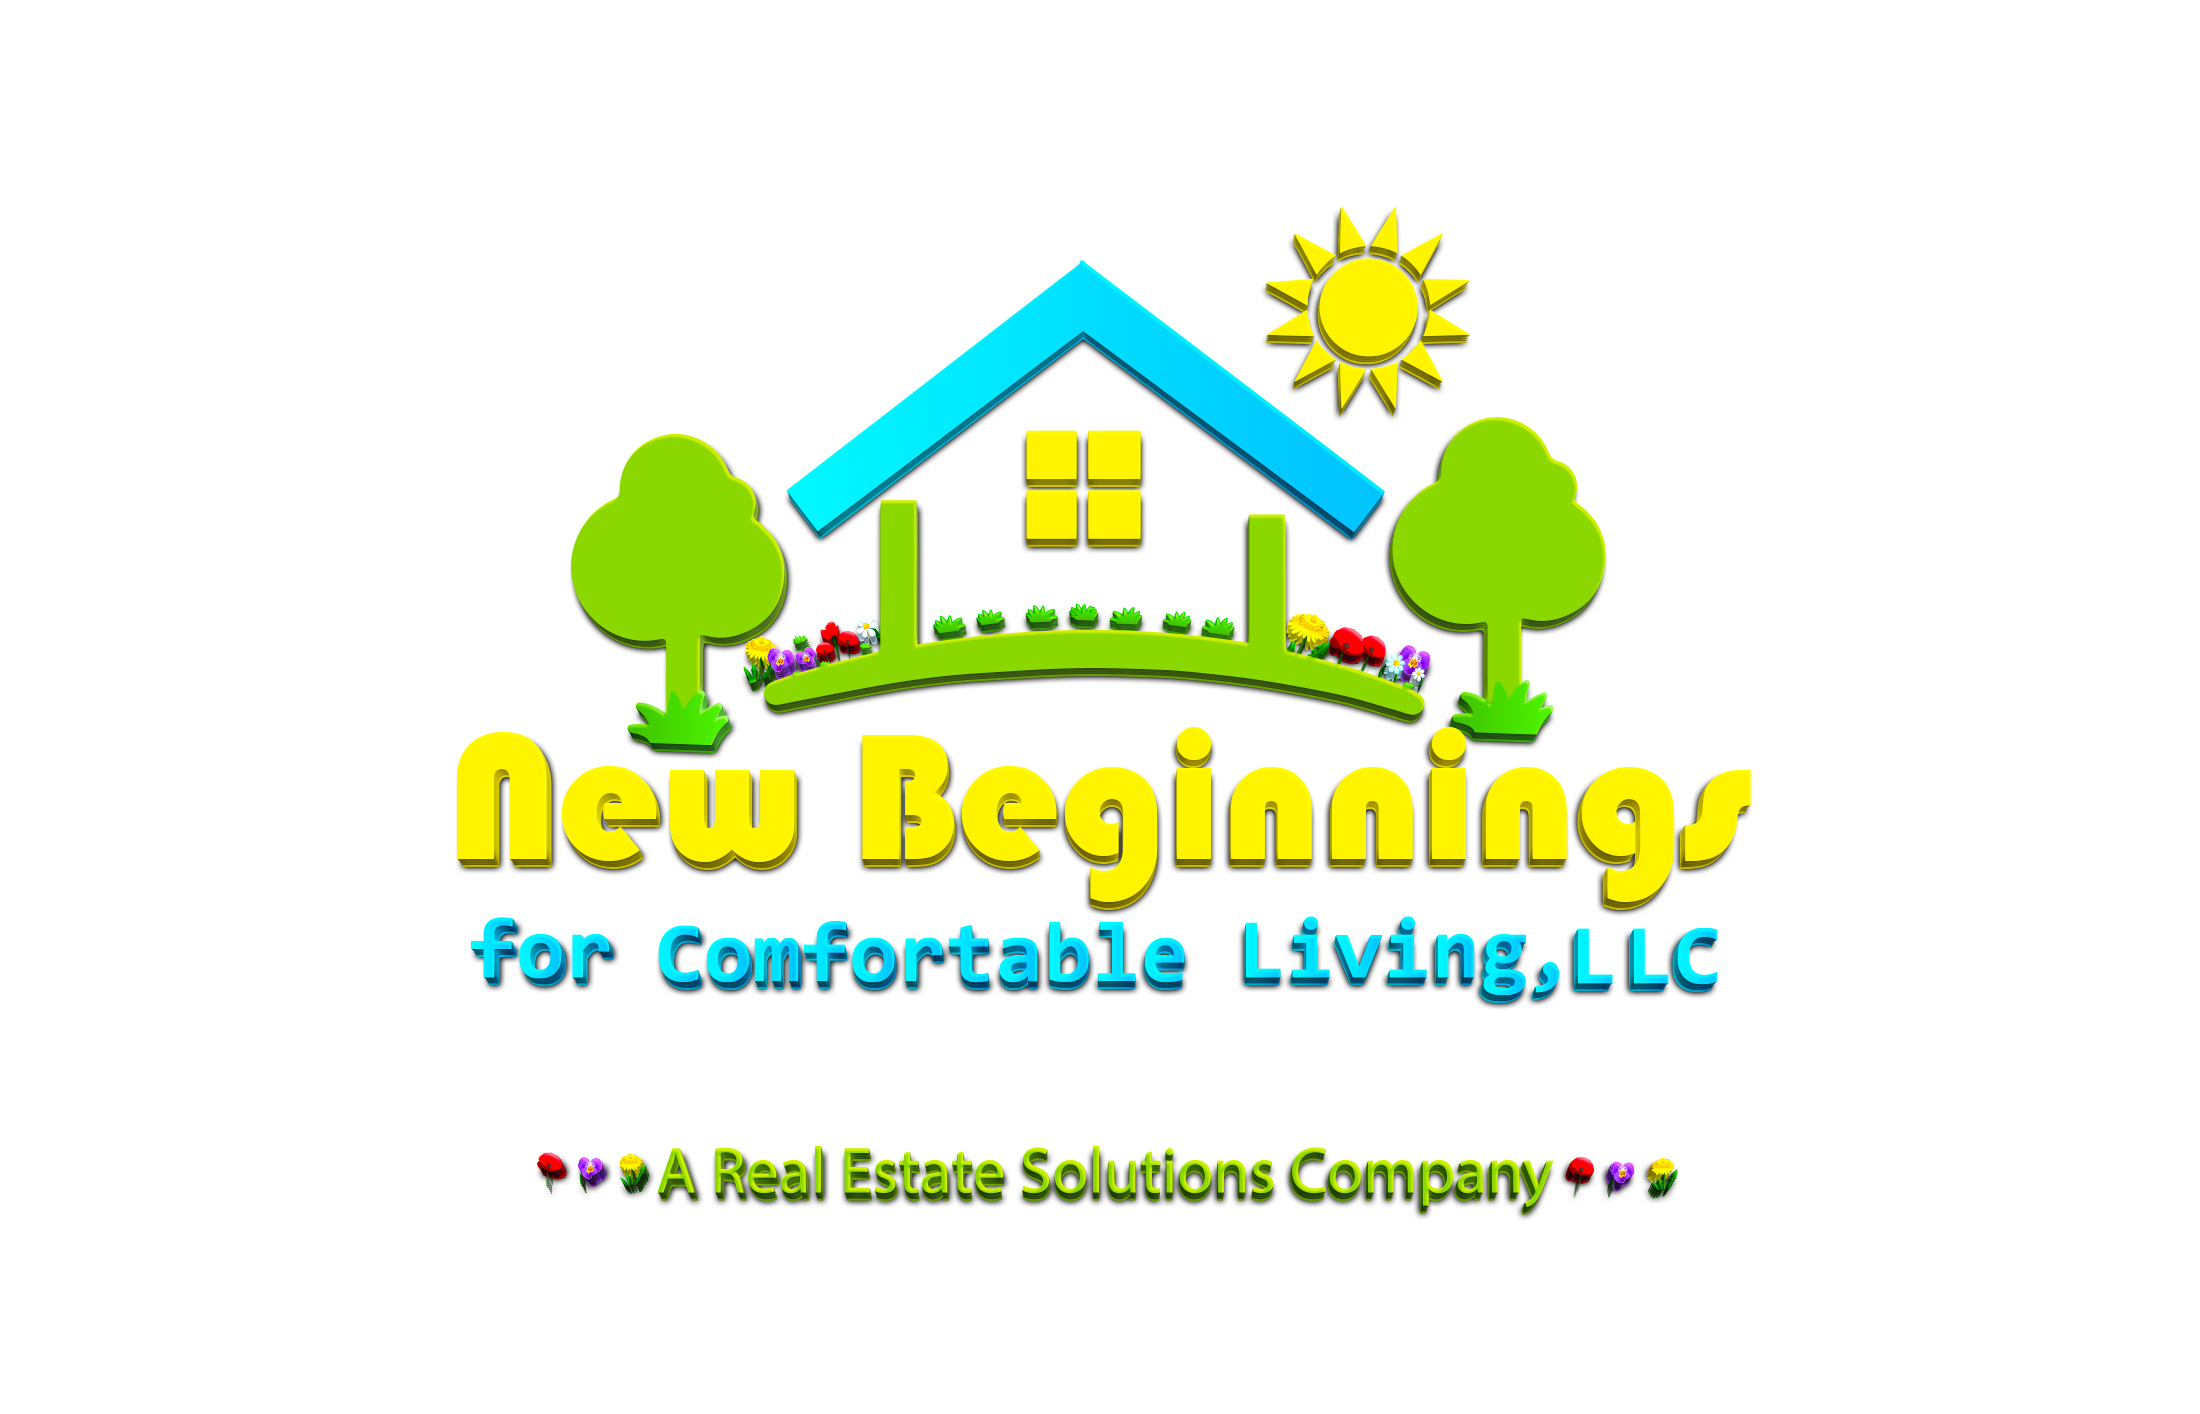 New Beginnings for Comfortable Living, LLC